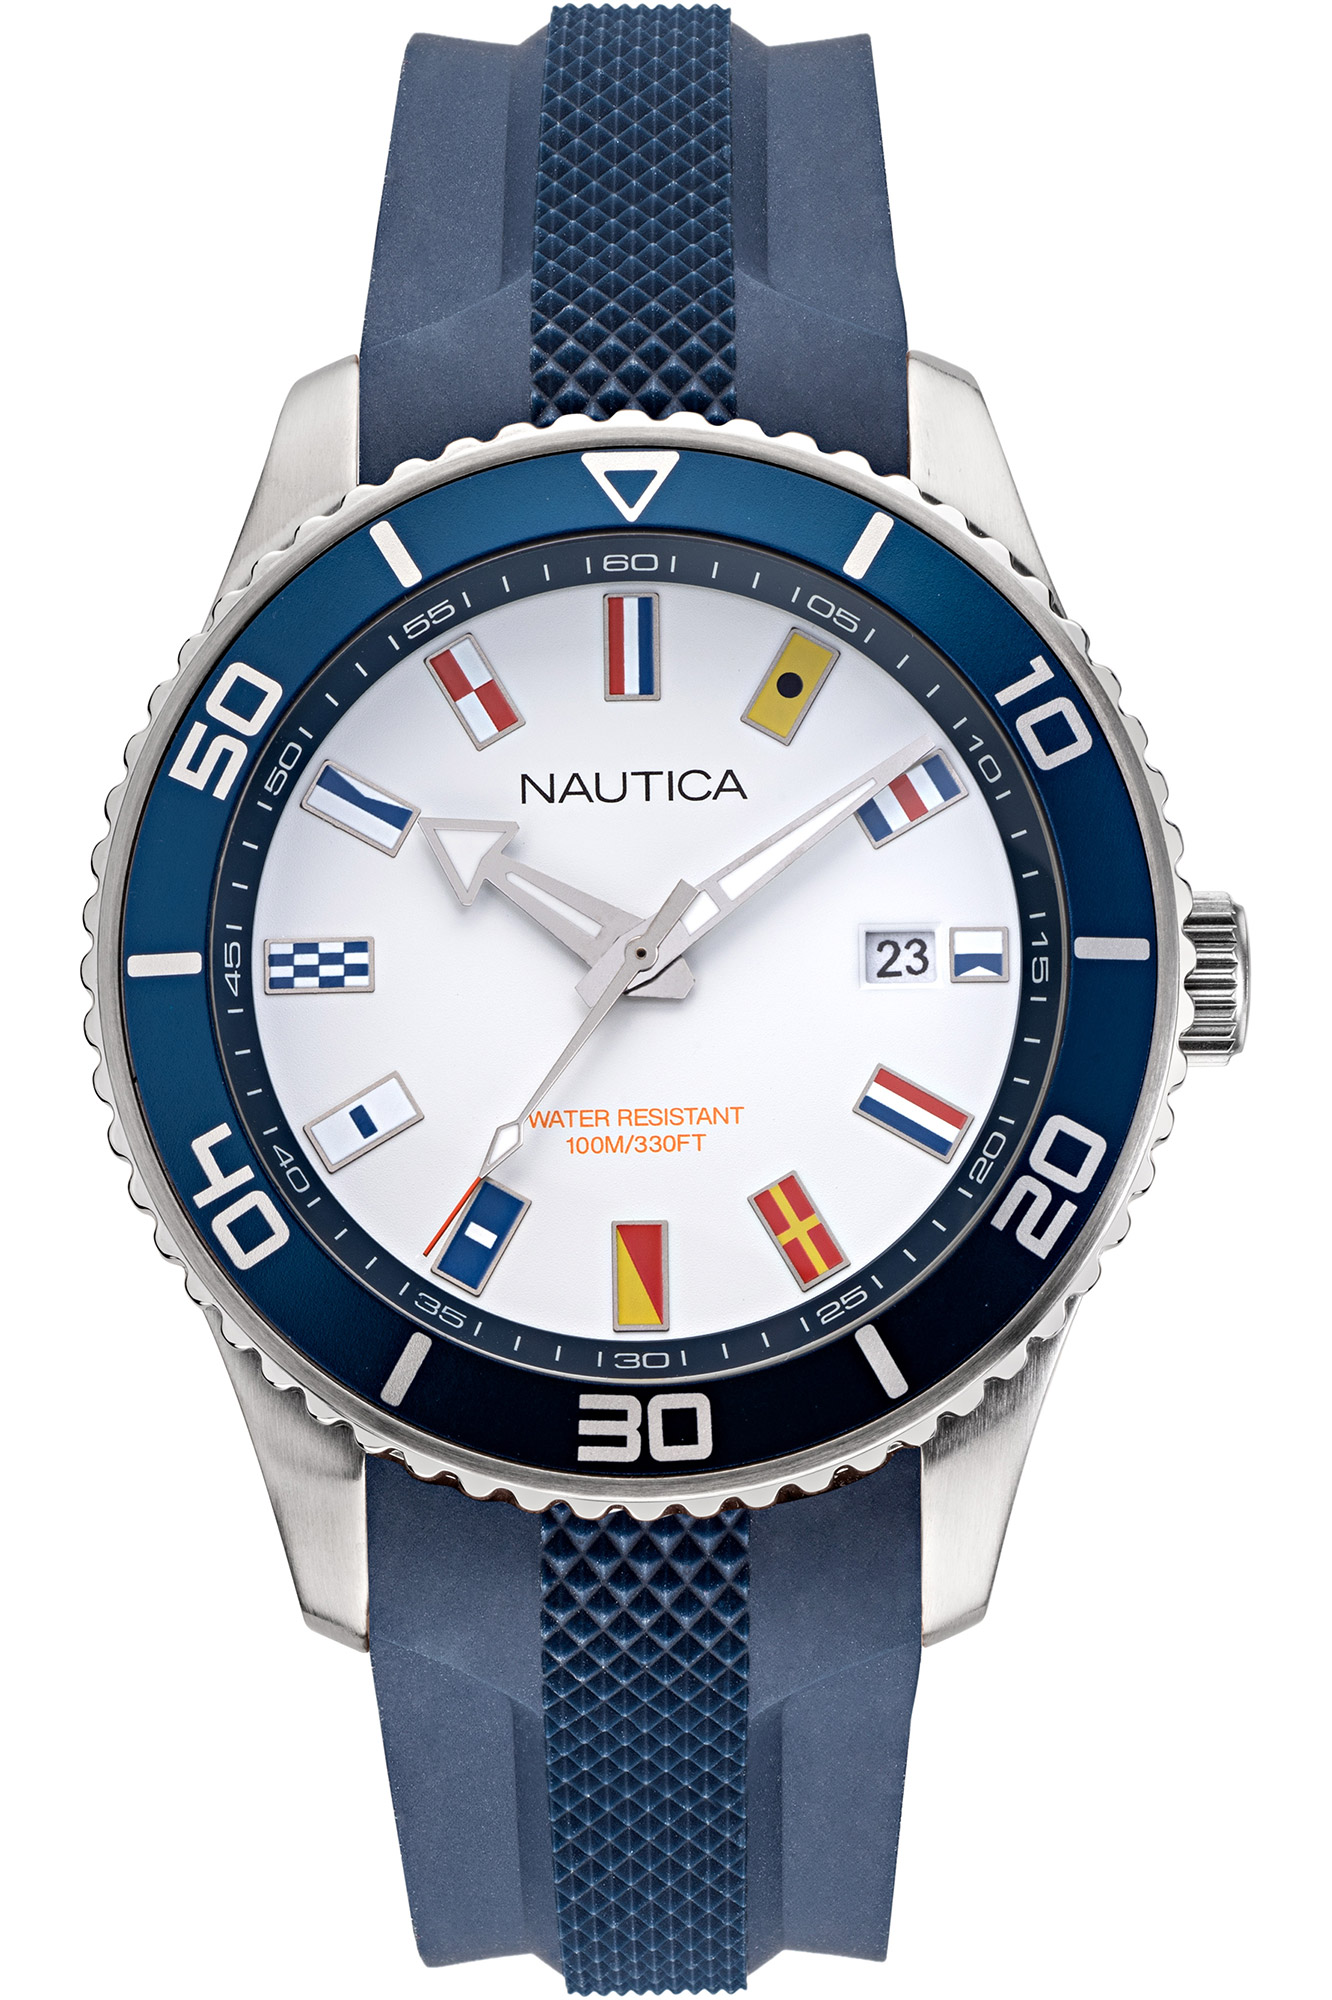 Watch Nautica nappbf914